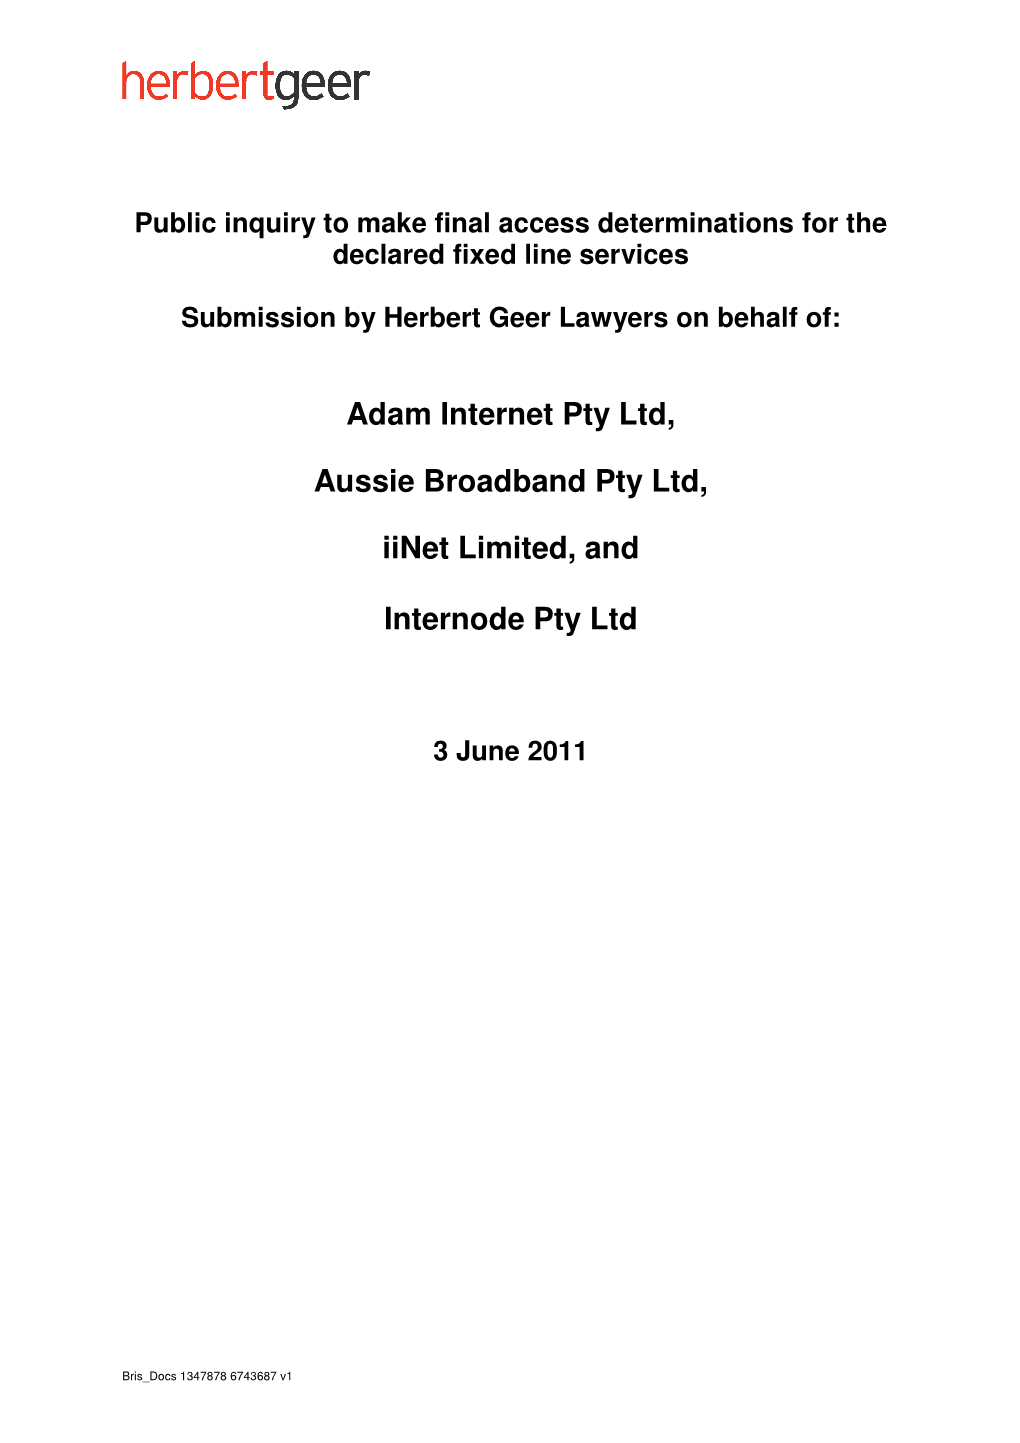 Adam Internet Pty Ltd, Aussie Broadband Pty Ltd, Iinet Limited, and Internode Pty Ltd